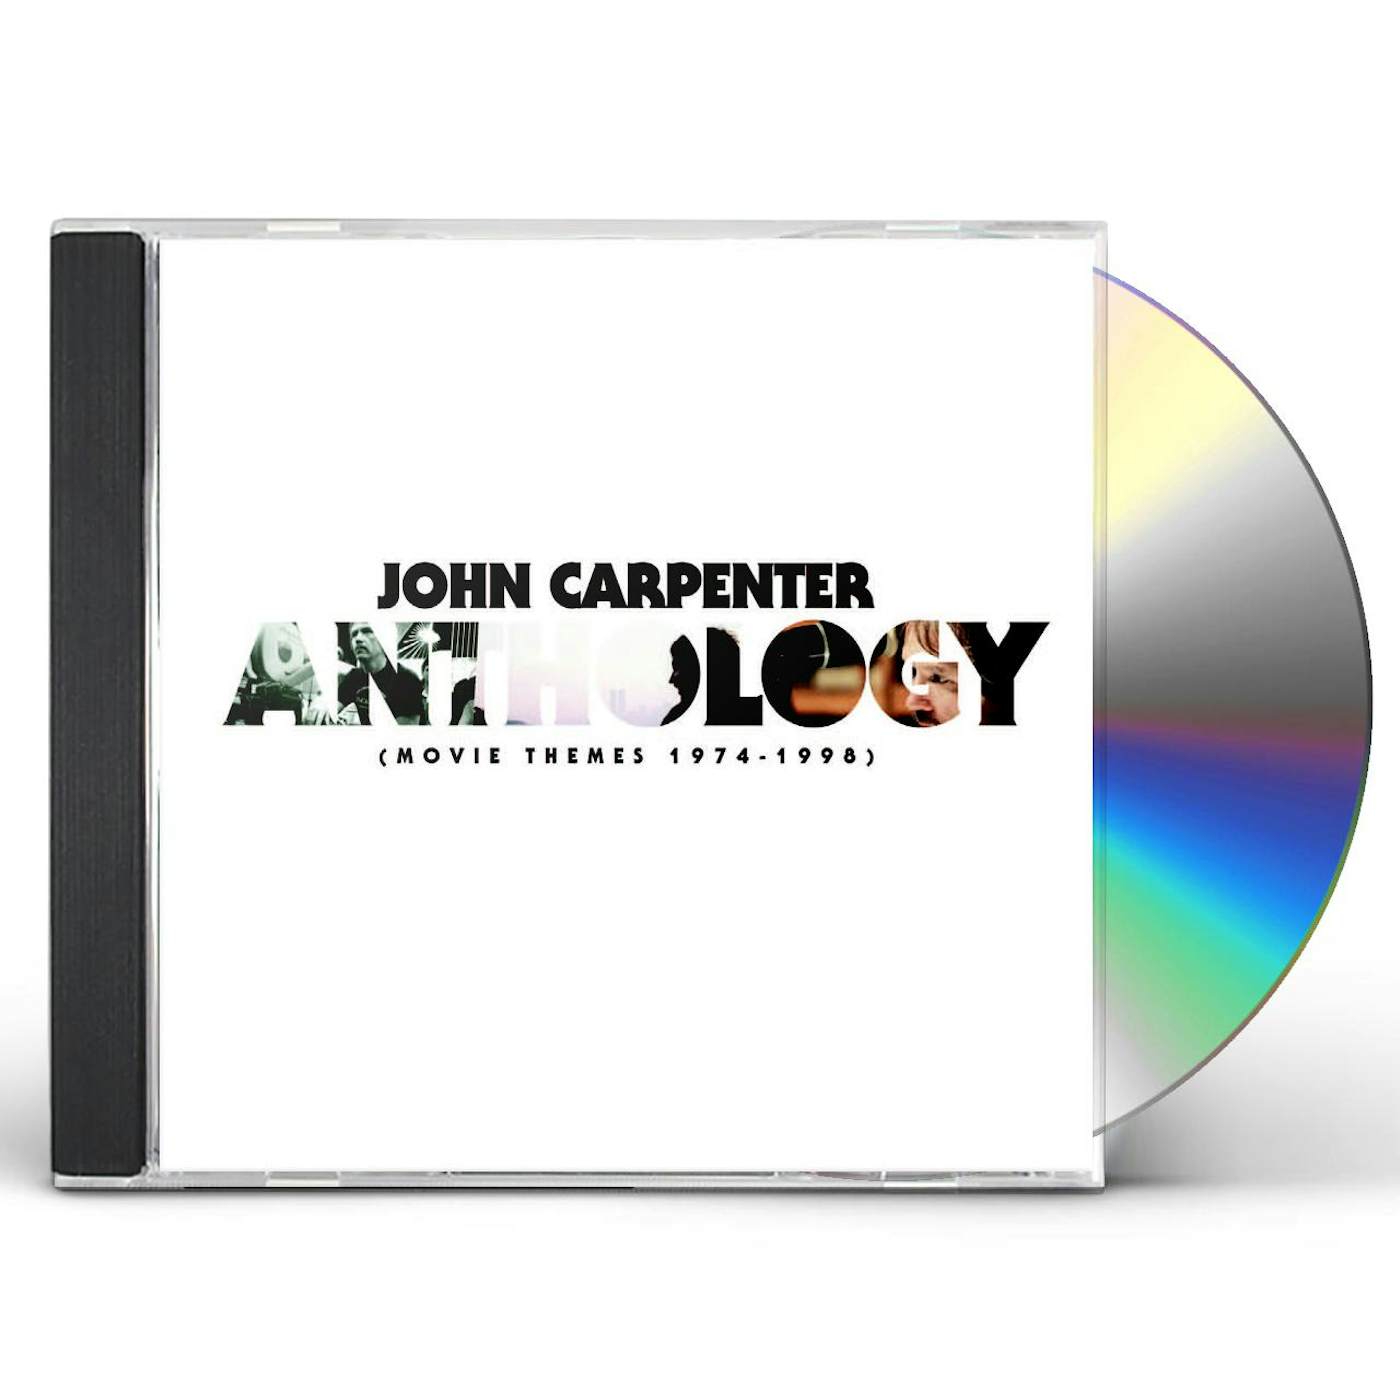 John Carpenter ANTHOLOGY: MOVIE THEMES 1974-1998 - Original Soundtrack CD